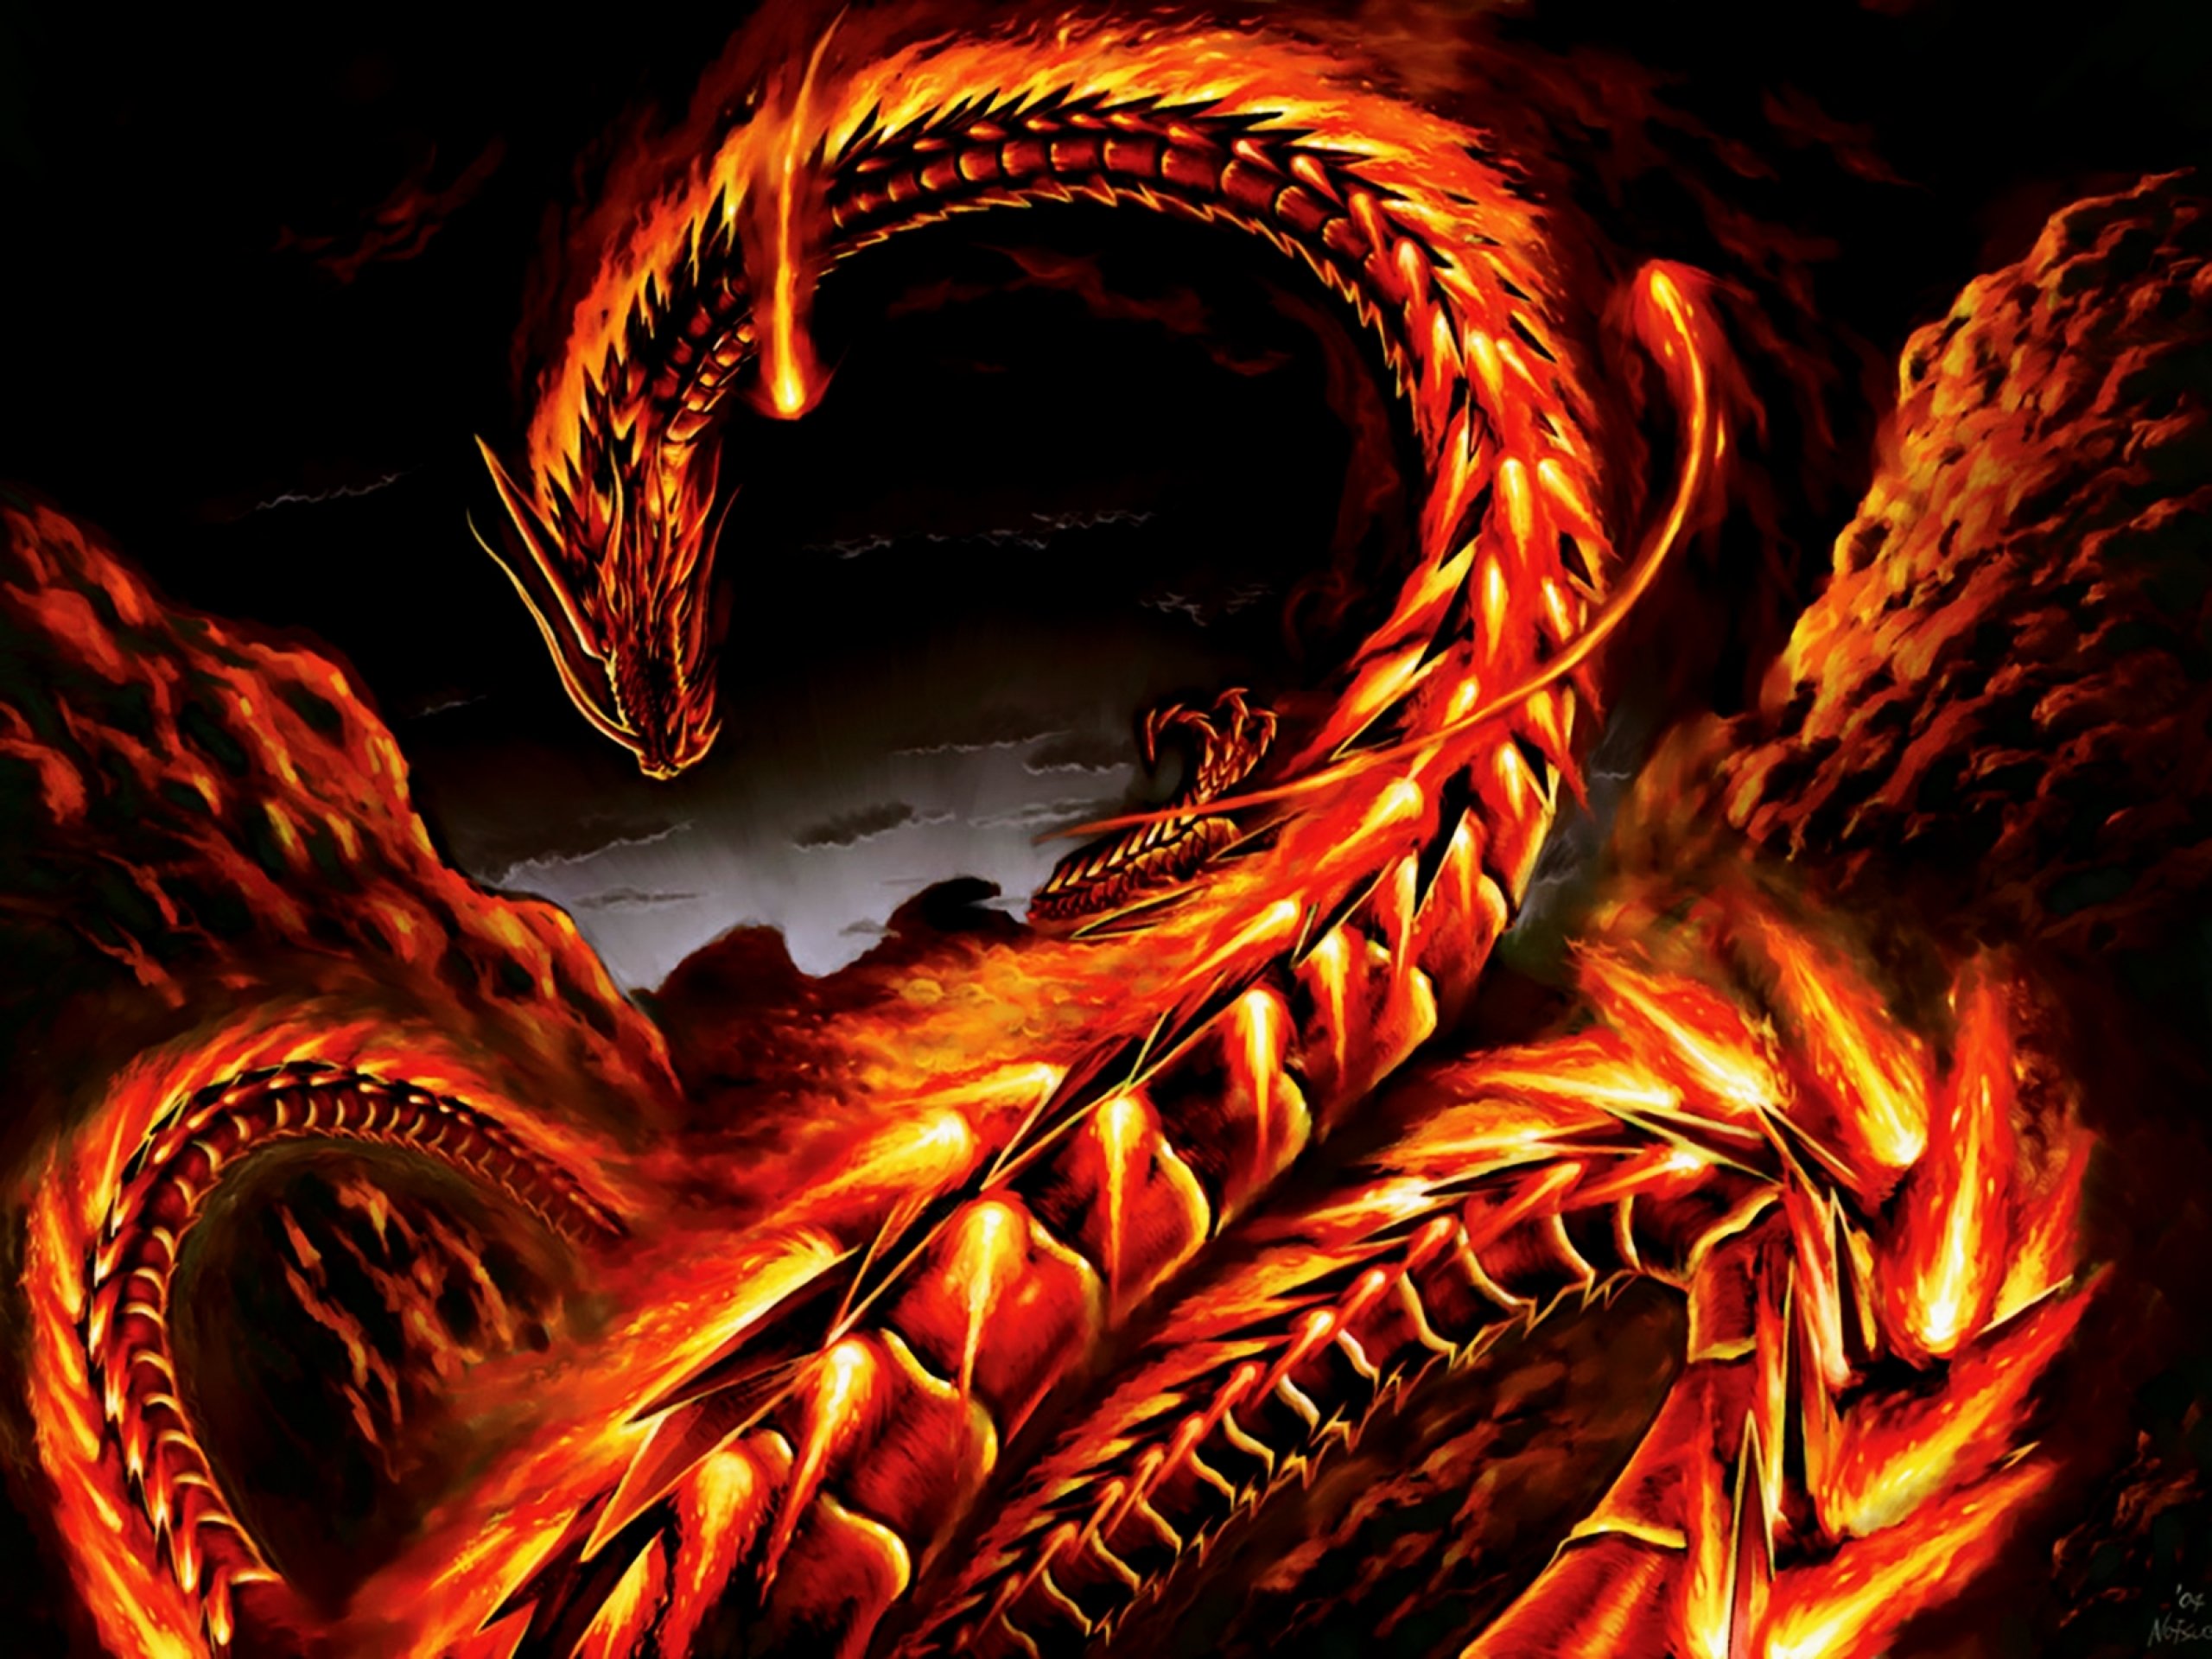 Дракон темного пламени. Шенлу змея демон. Гивр дракон. Огненный змей Пандемониум. Пандемониум Огненный дракон.